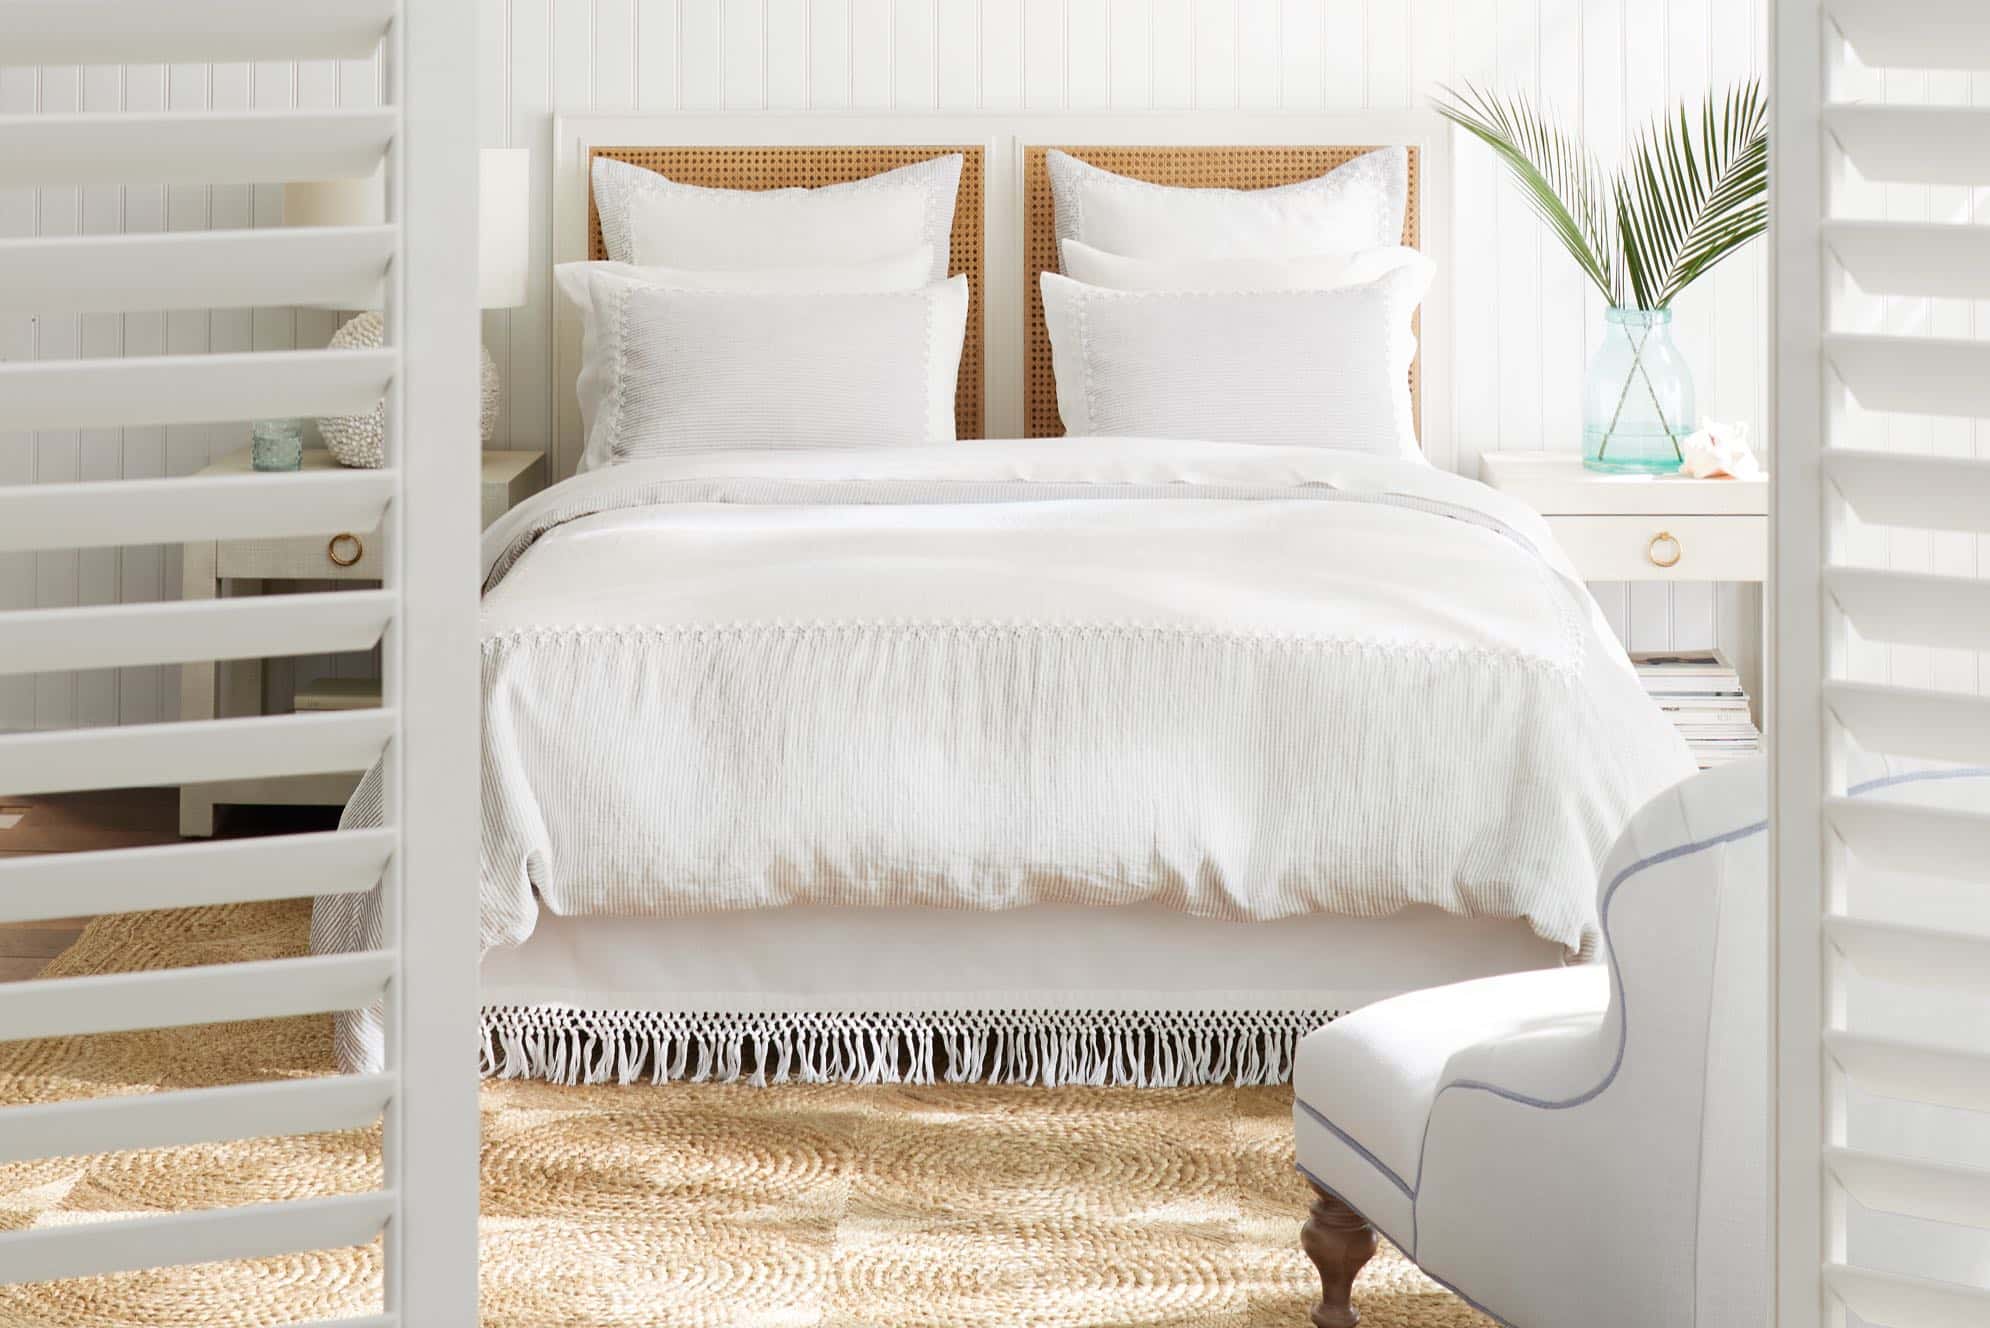 Bedroom Retreat- serena & lily - bedroom sanctuary - white bedroom - bedroom remodel 